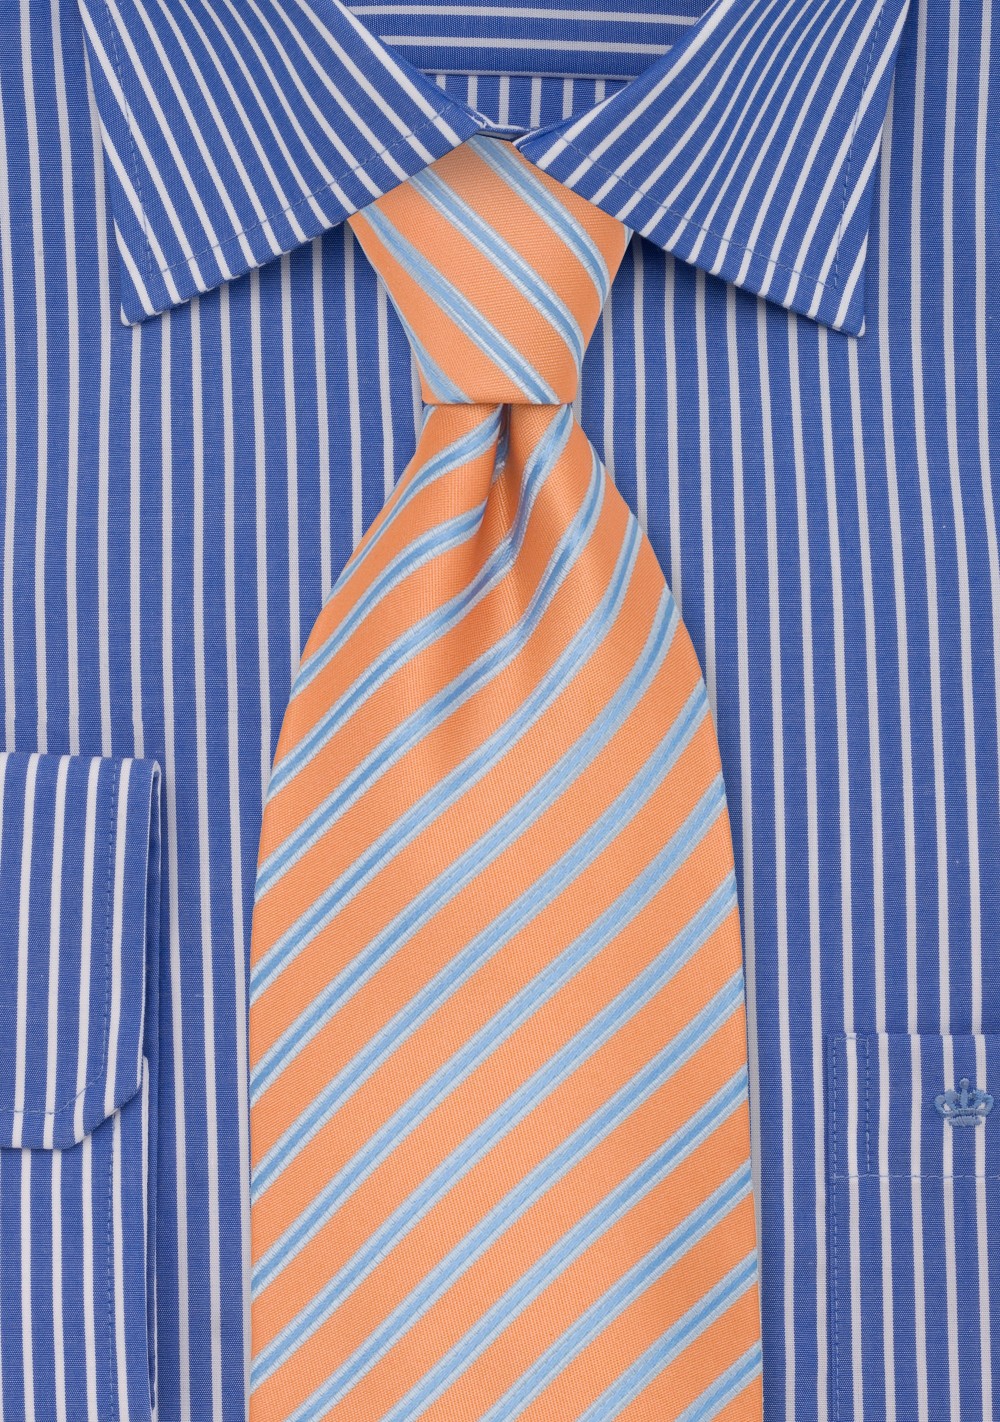 Buy > orange and light blue shirt > in stock